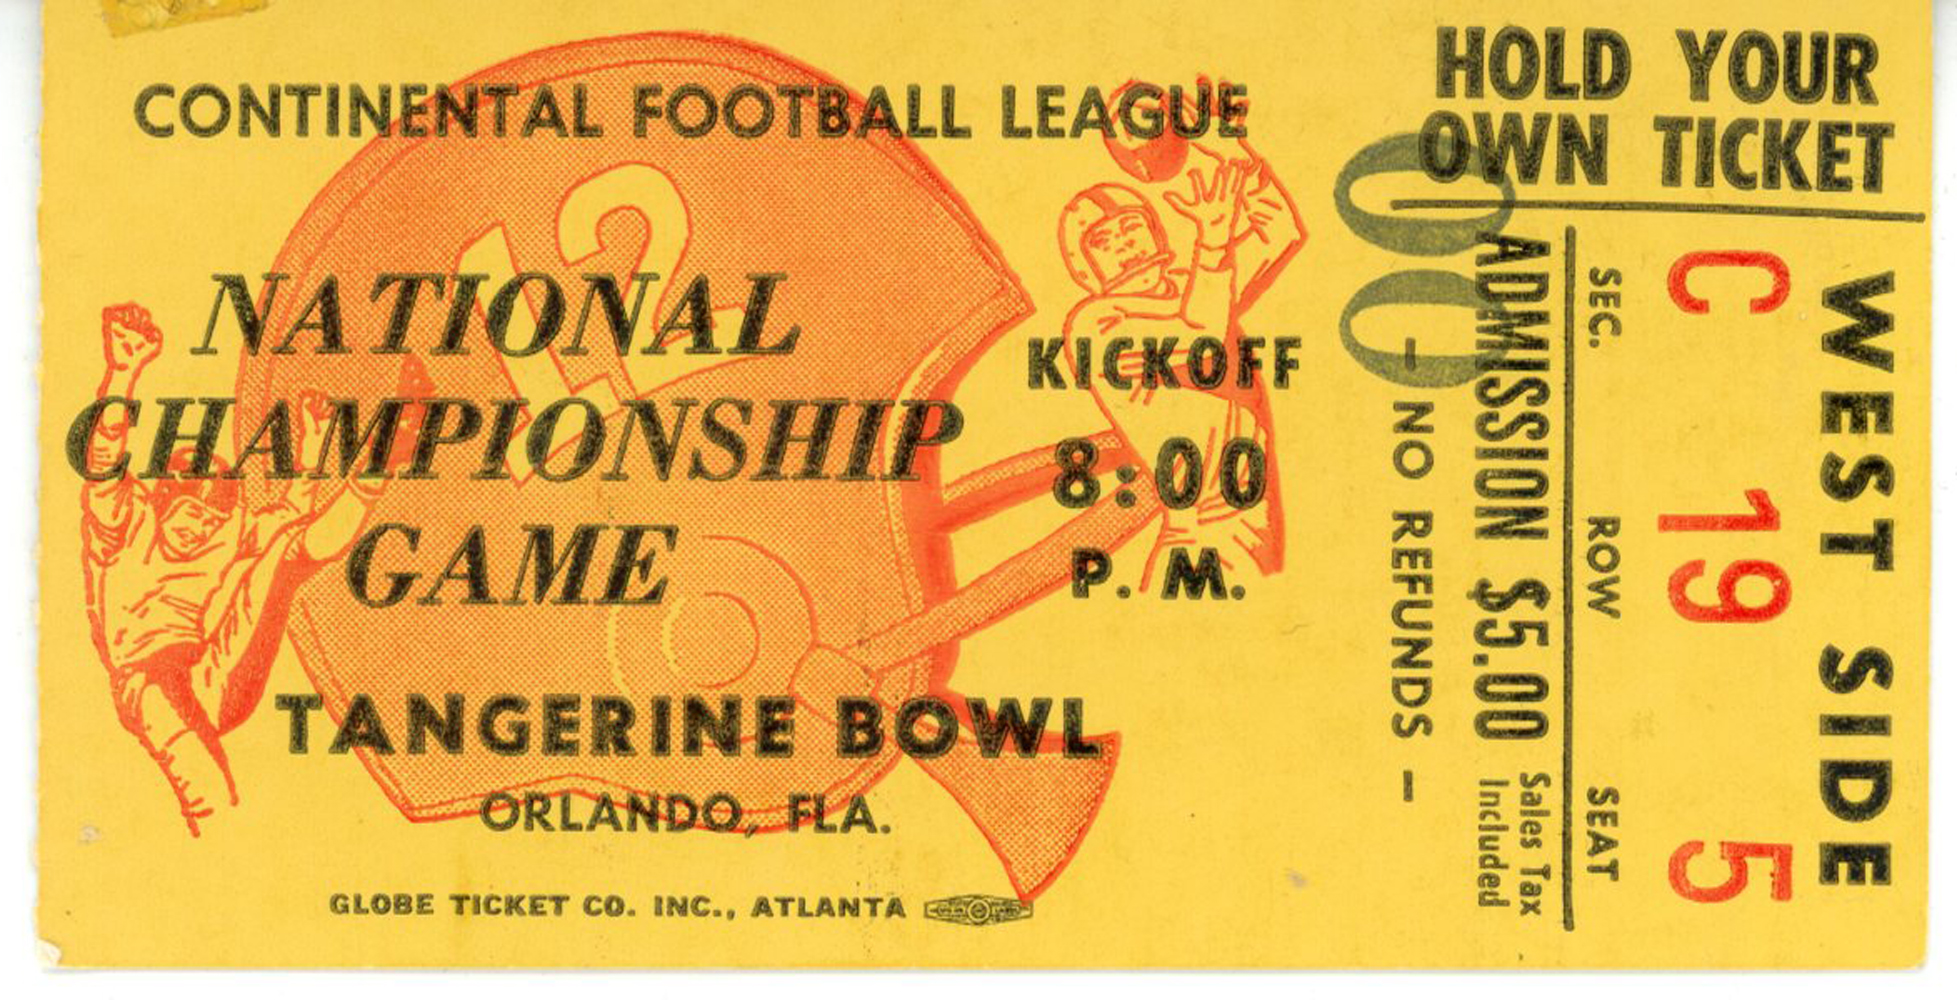 Continental Football League 1968 National Championship Ticket Stub